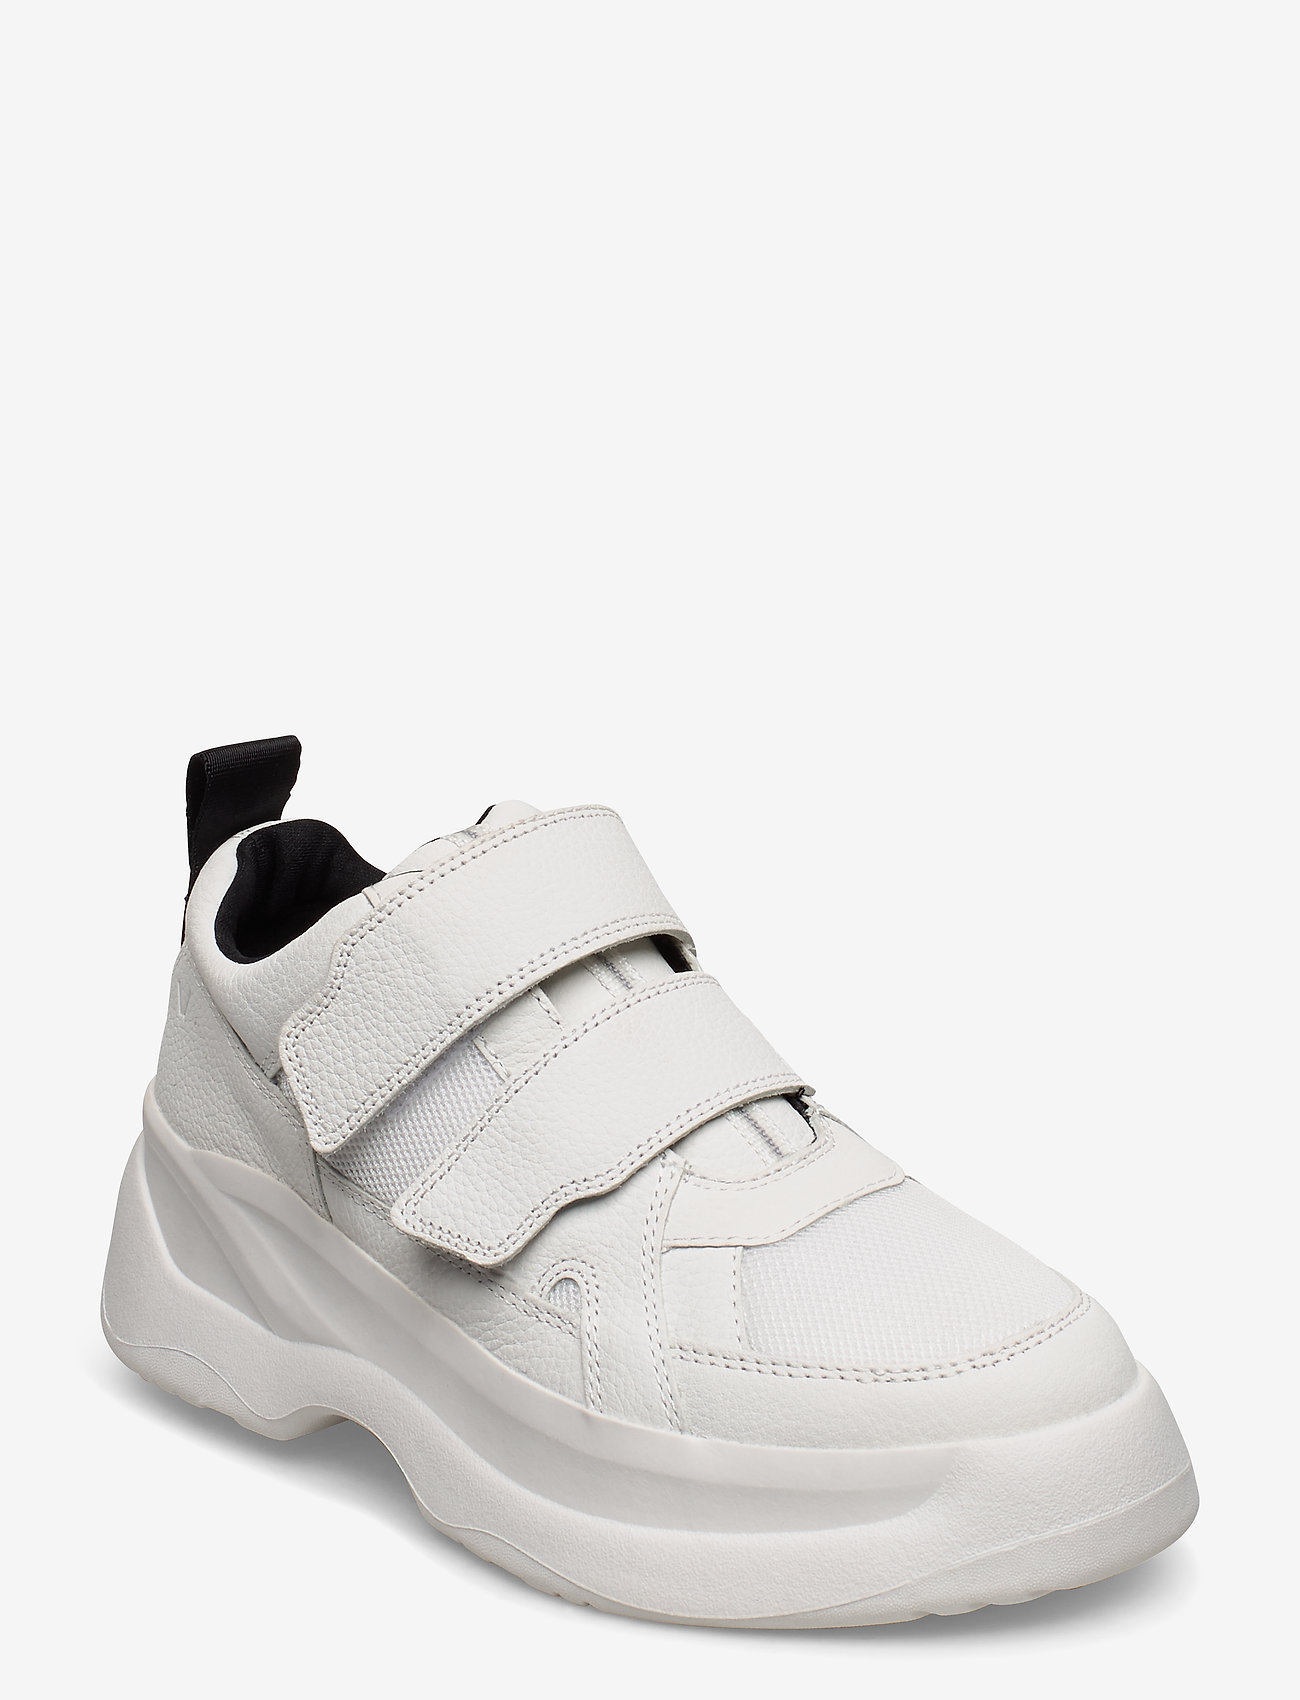 vagabond sneakers